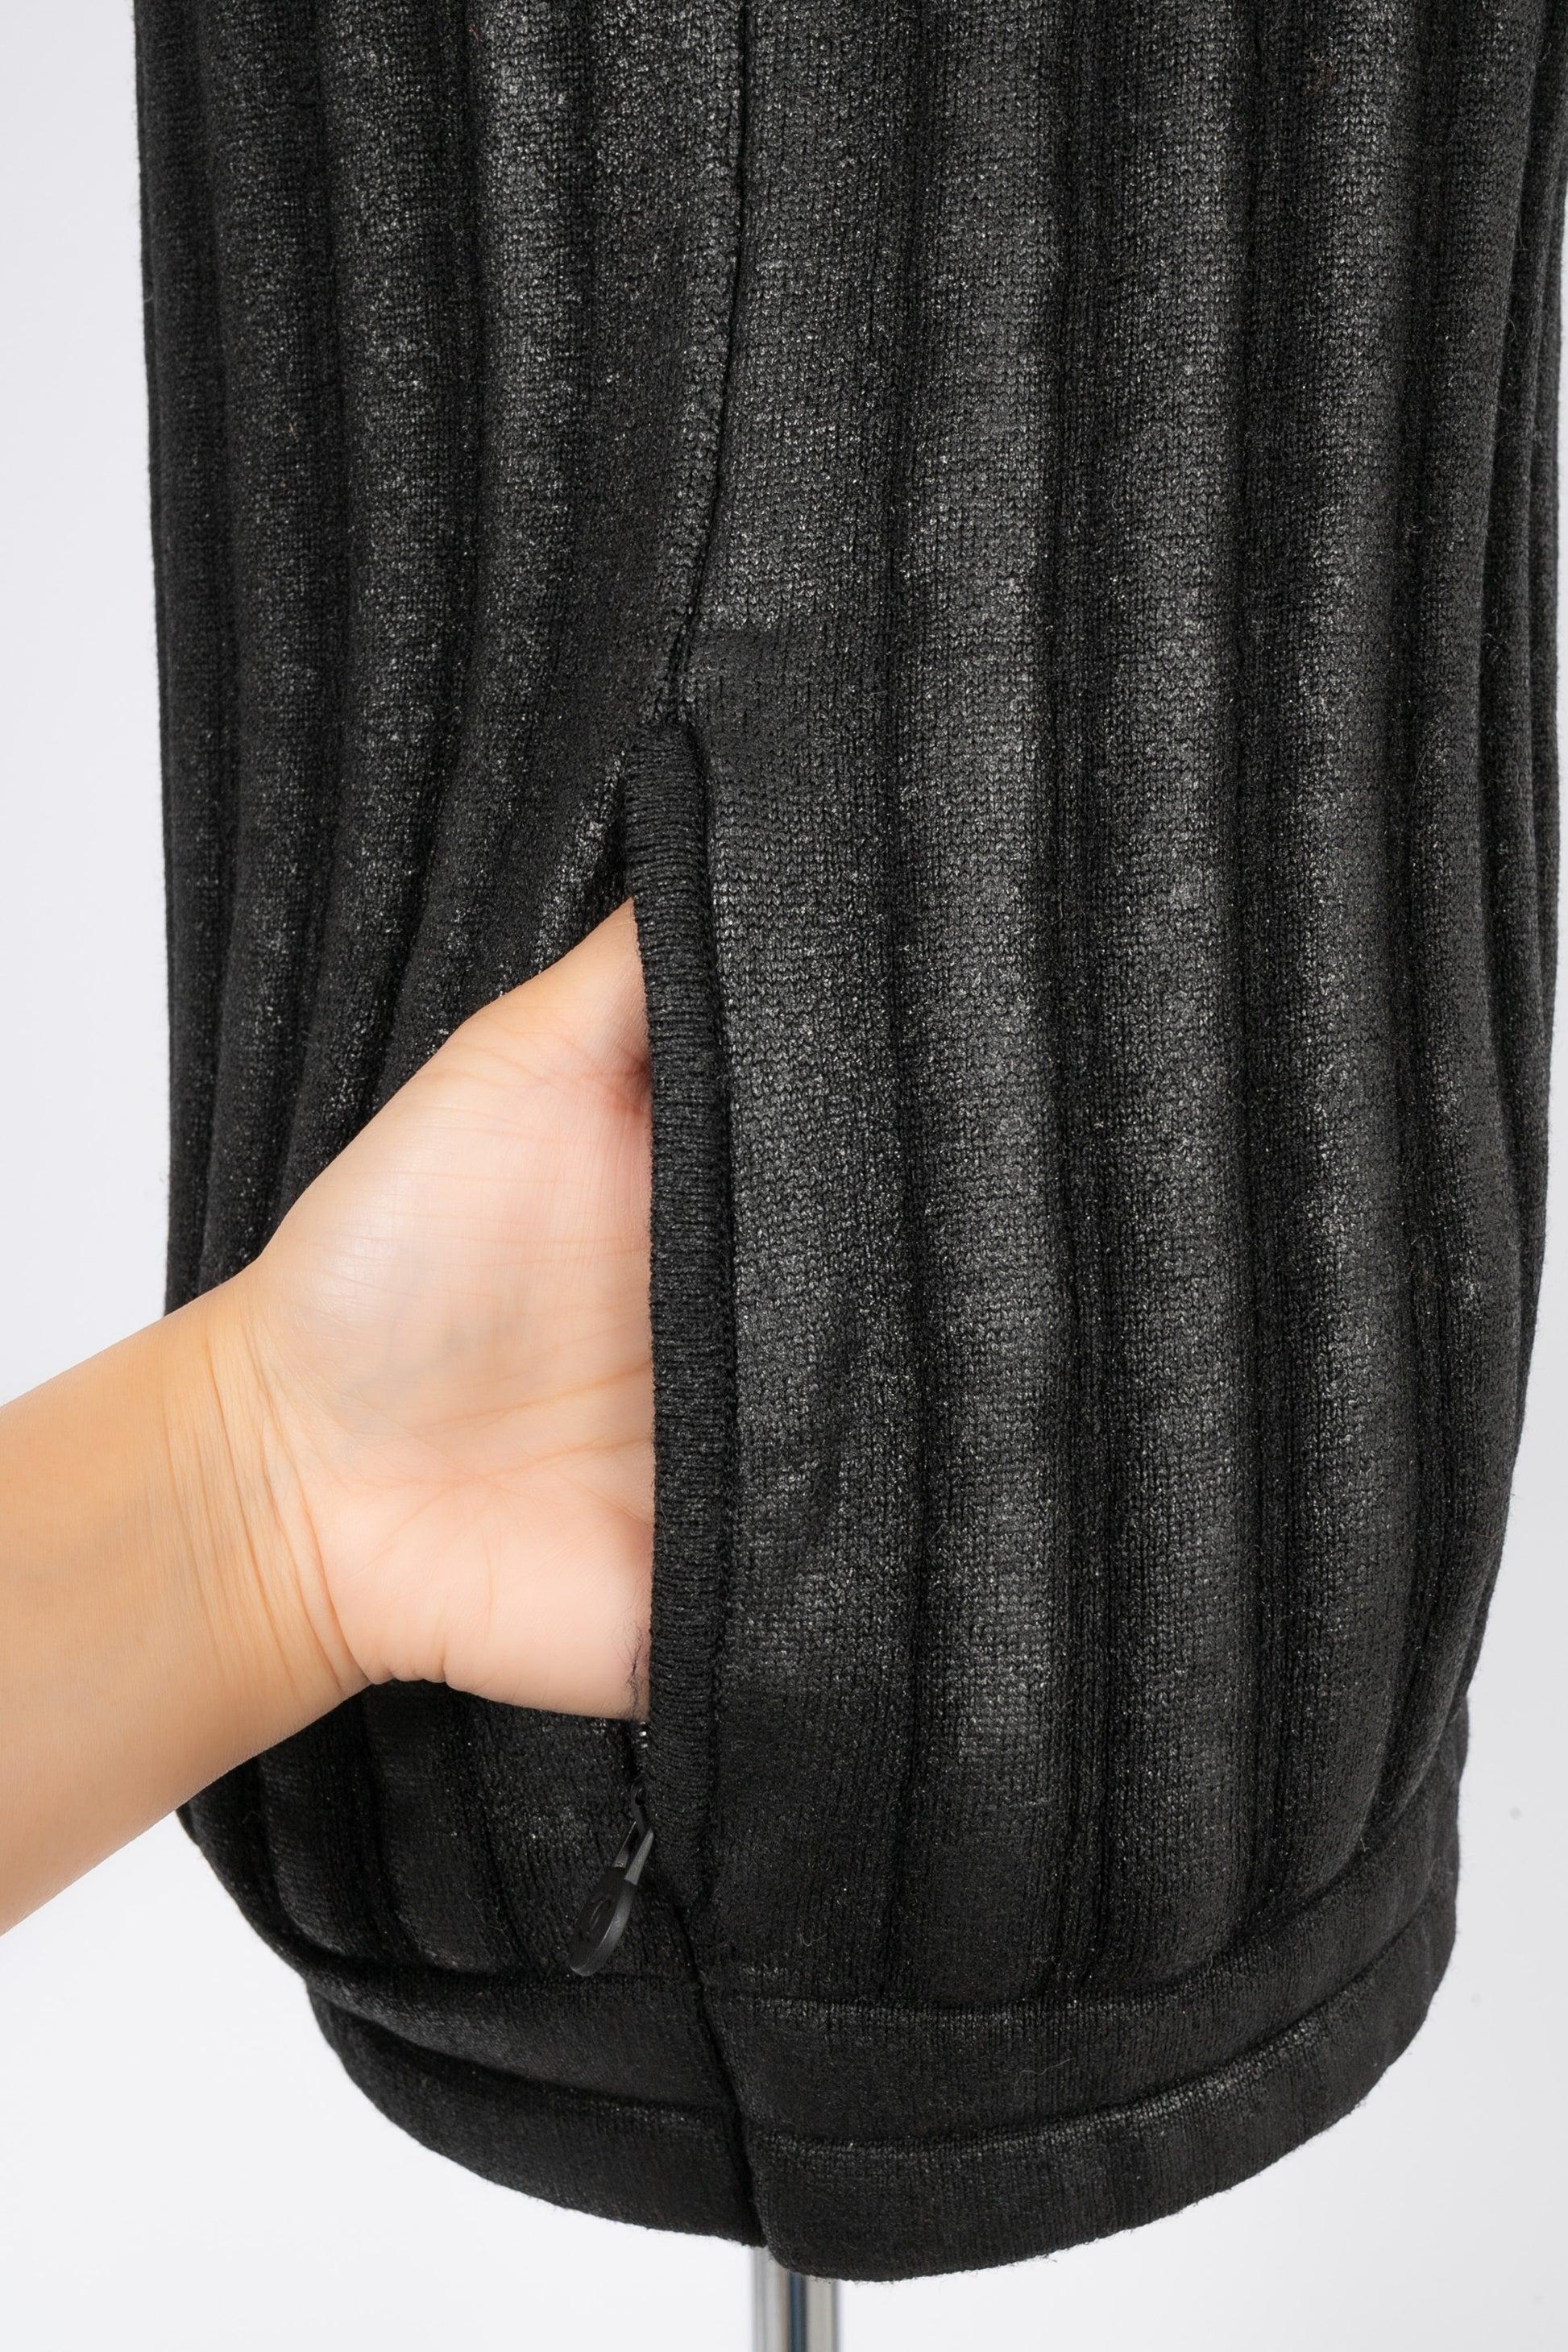 Chanel Black Coated Corduroy Mesh Sleeveless Cardigan For Sale 2